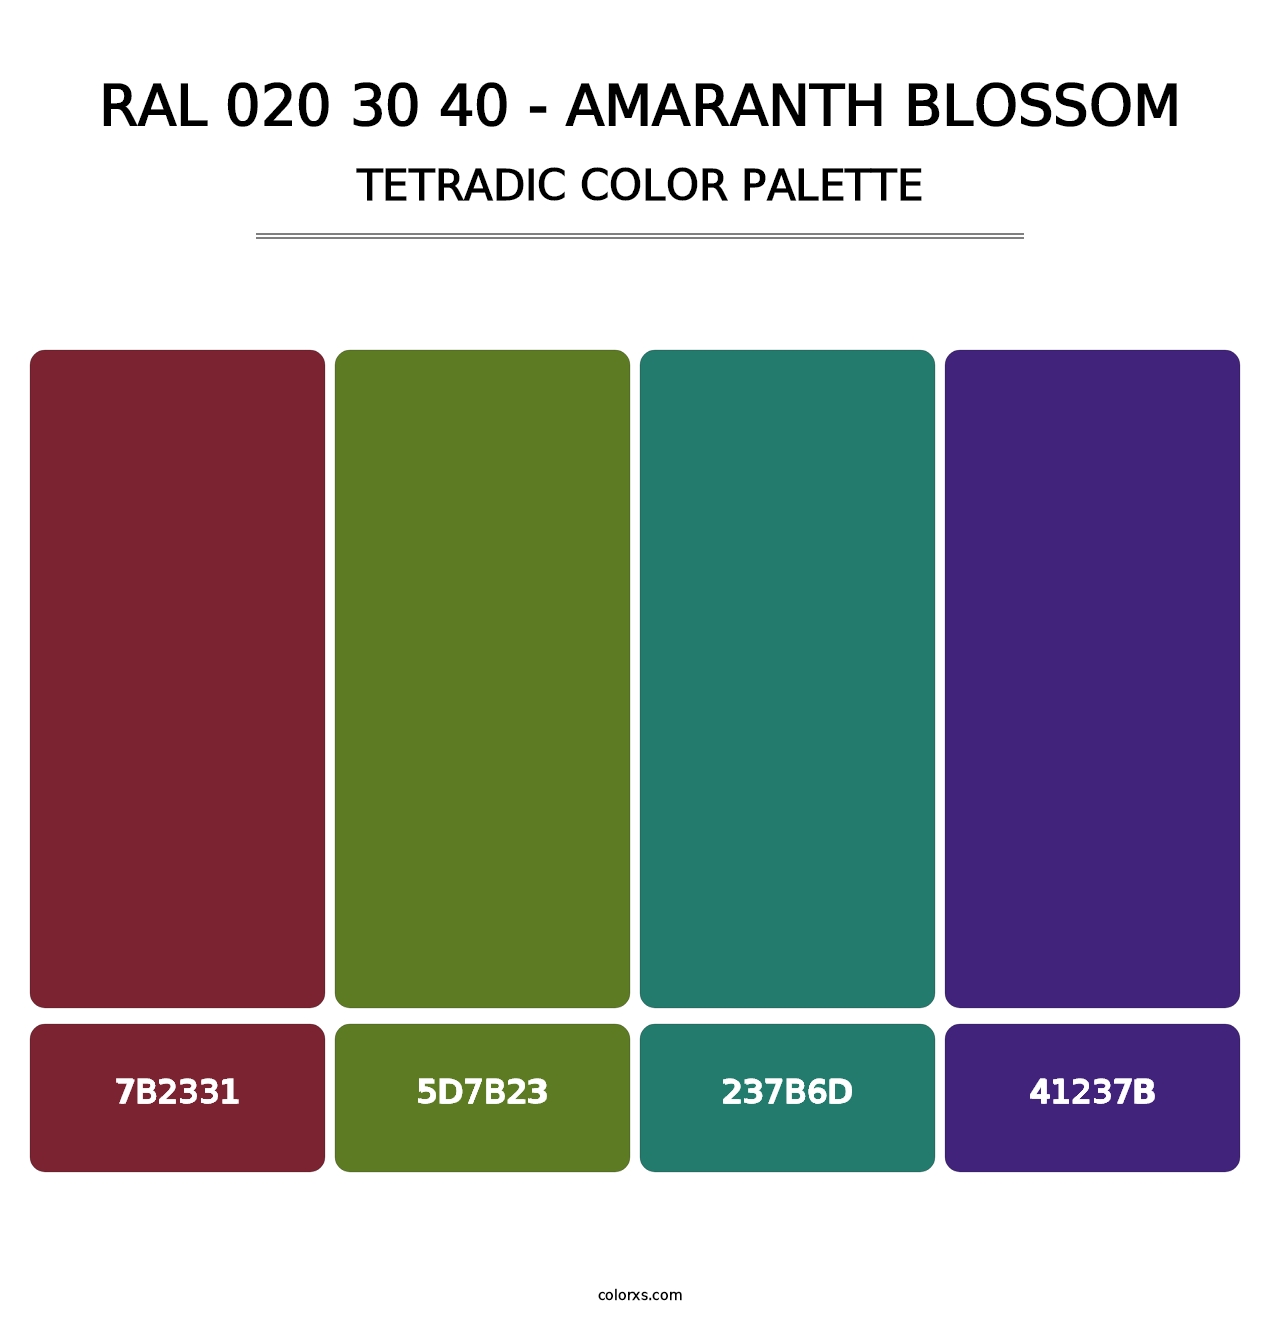 RAL 020 30 40 - Amaranth Blossom - Tetradic Color Palette